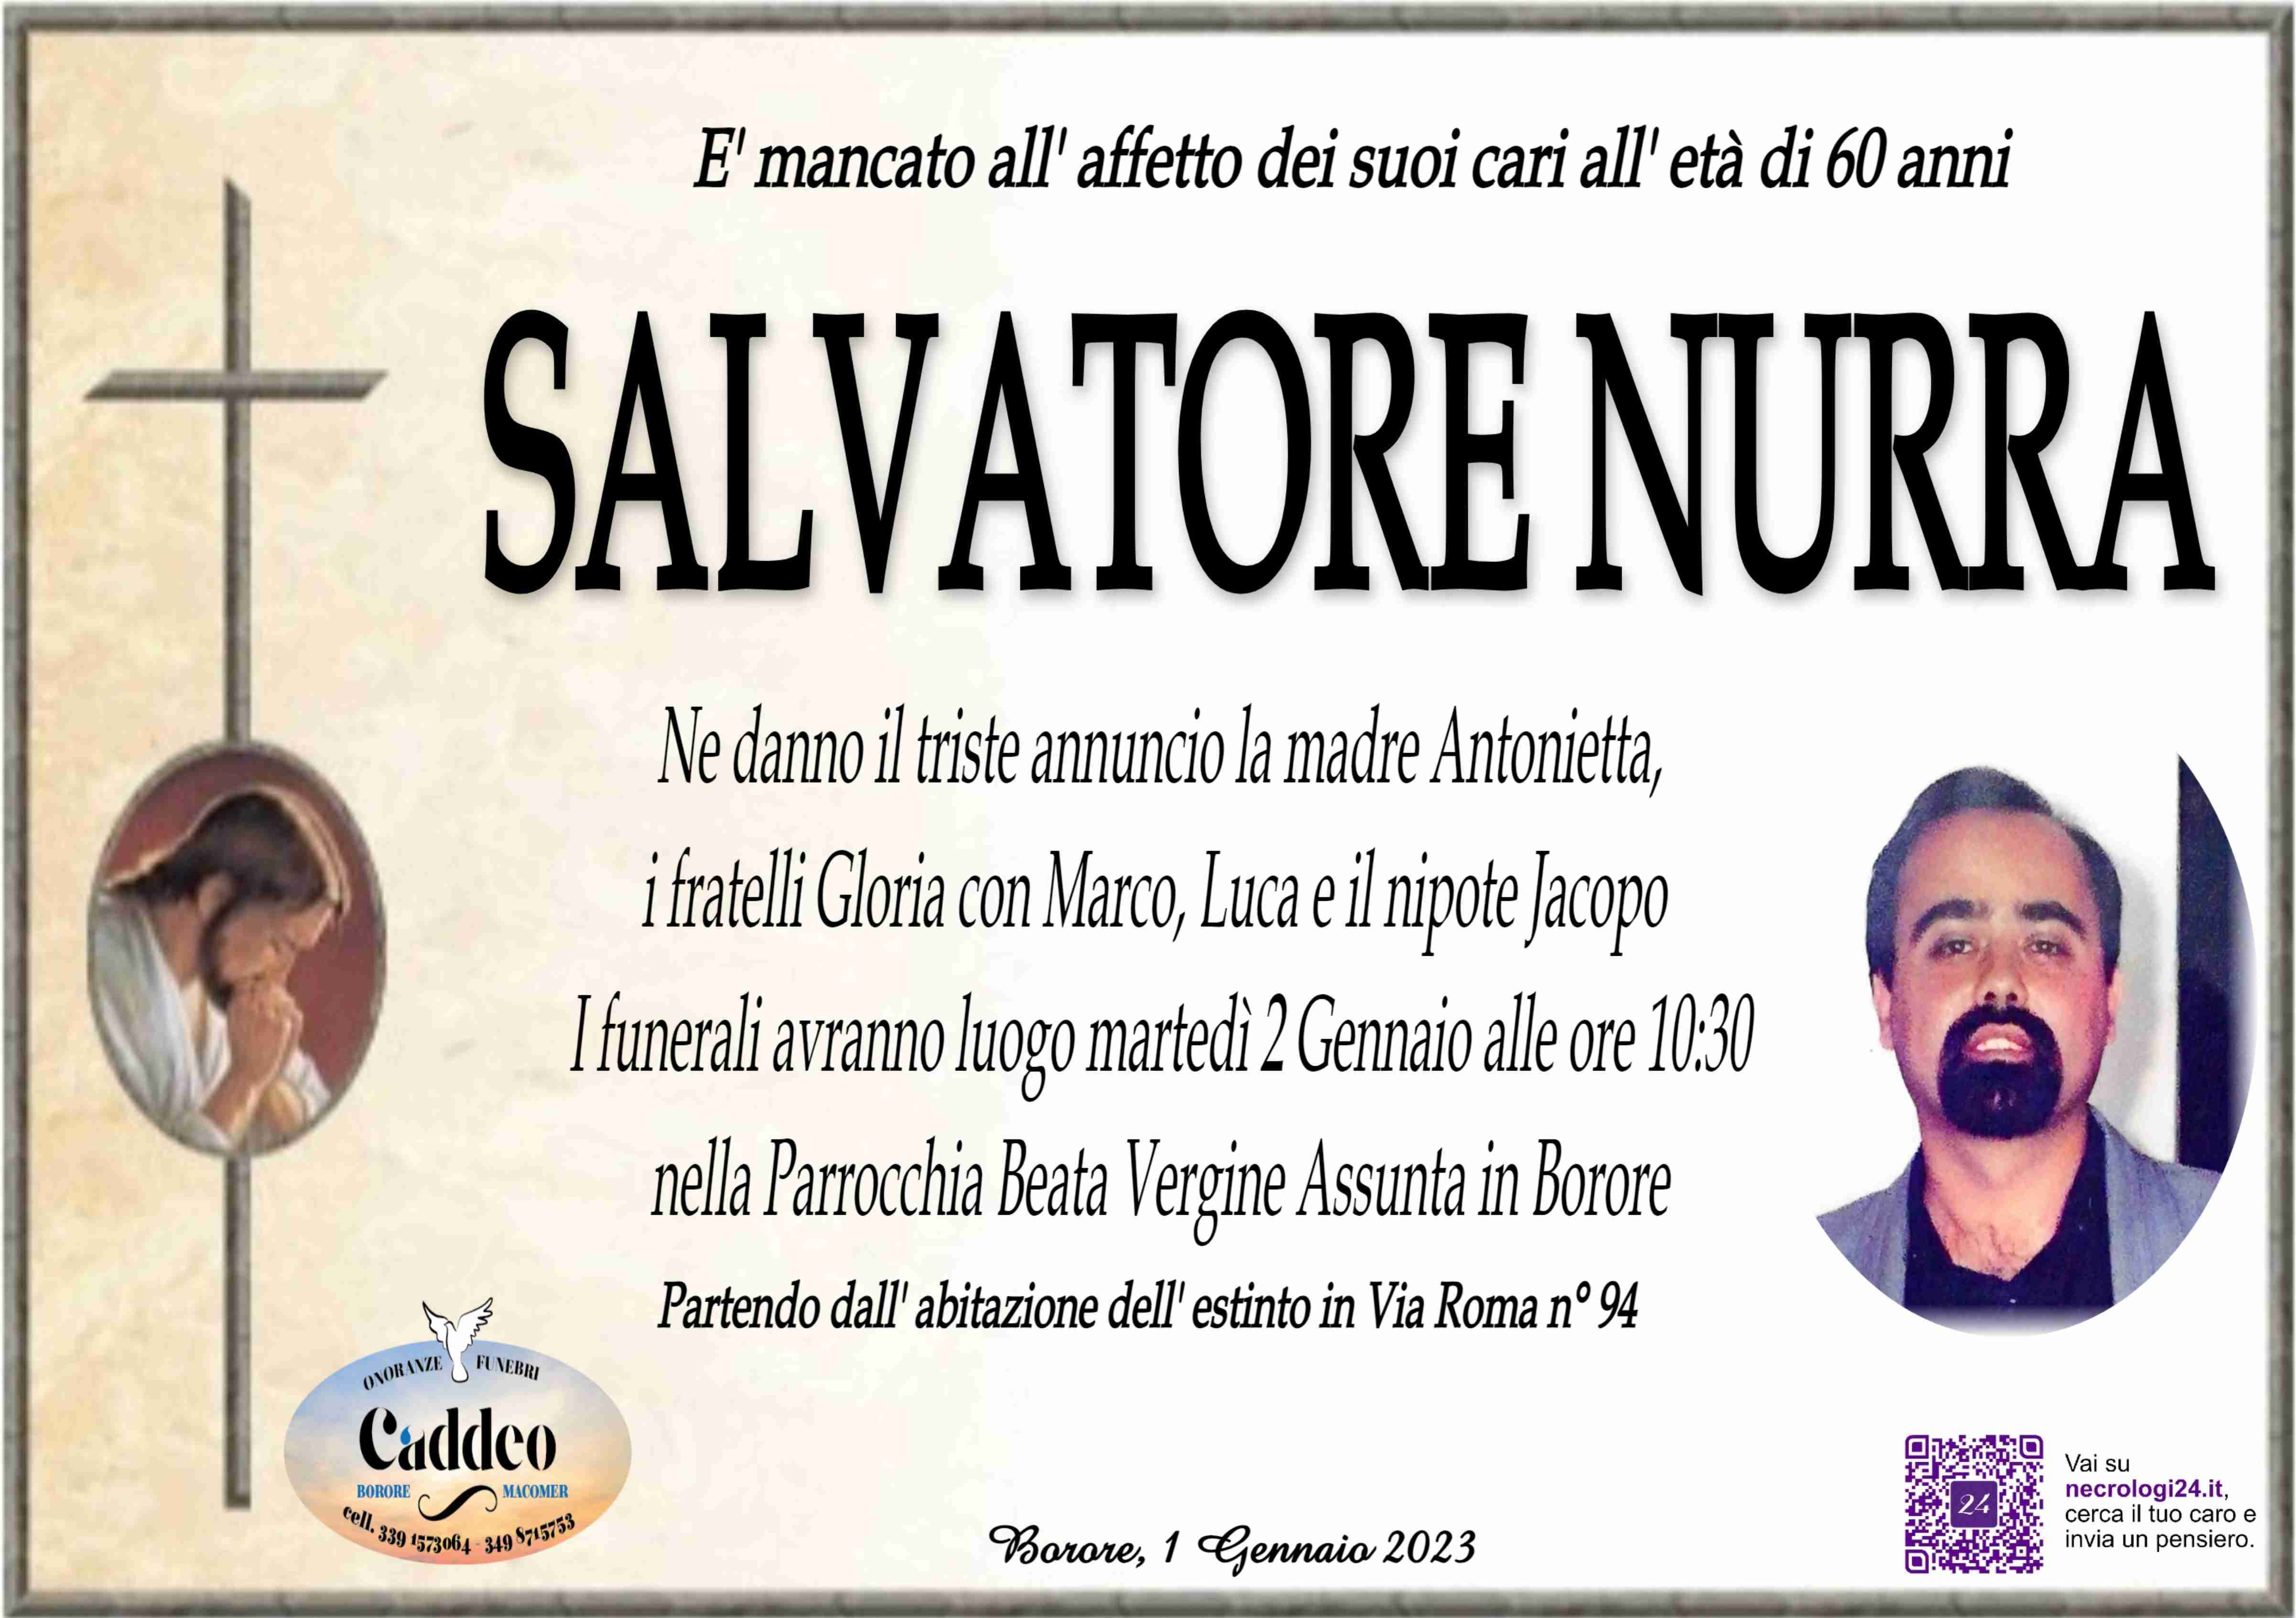 Salvatore Nurra